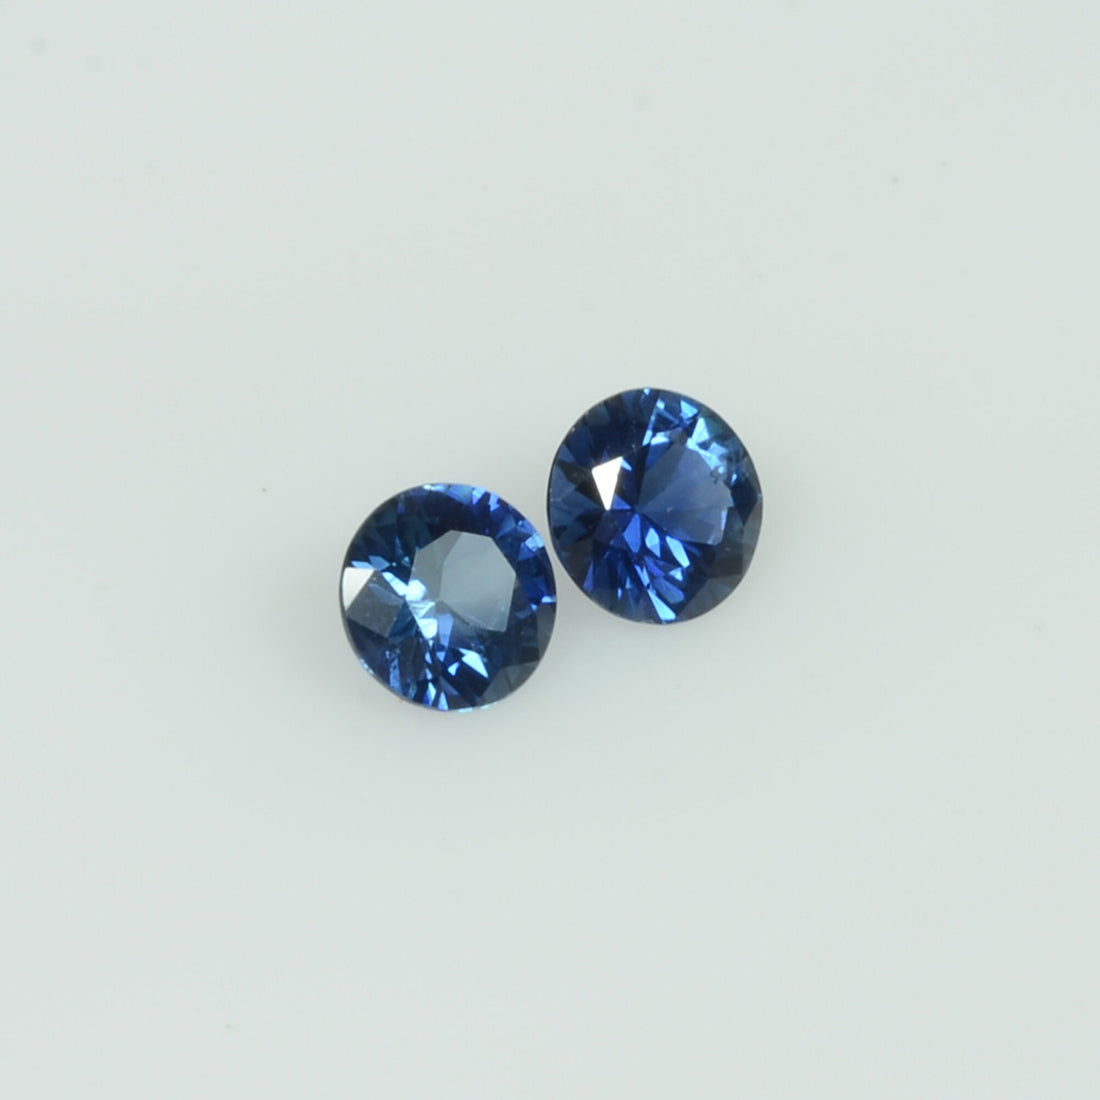 4-4.5 mm Natural Blue Sapphire Loose Gemstone Round Diamond Cut